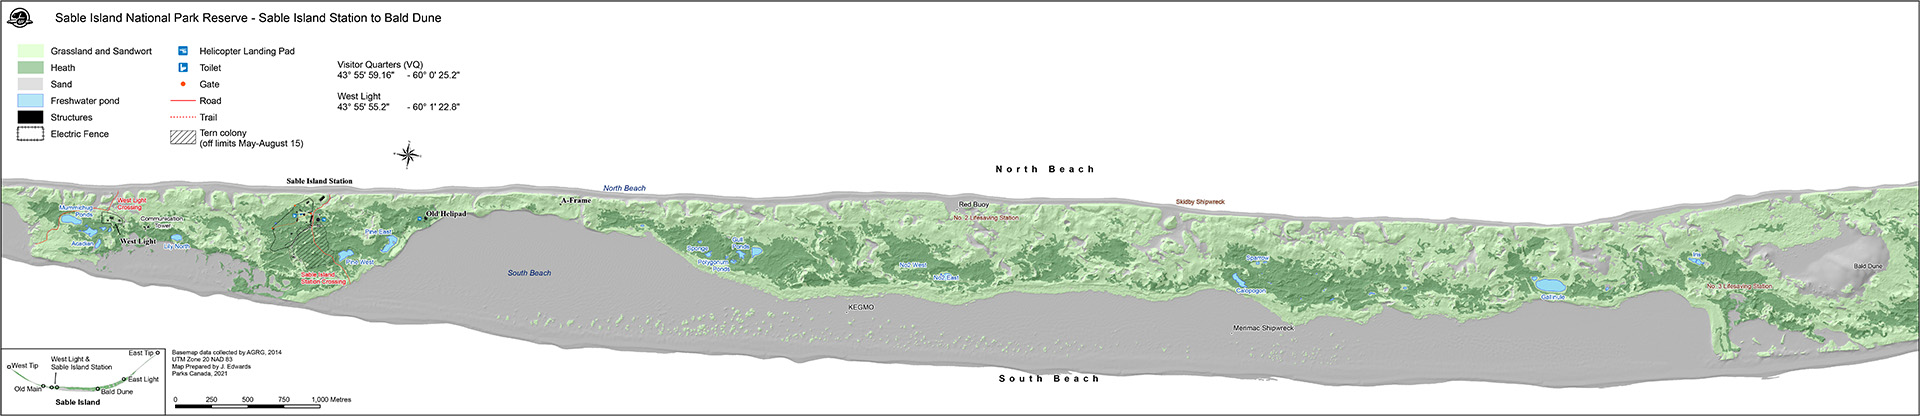 Sable Island topographic map 2021